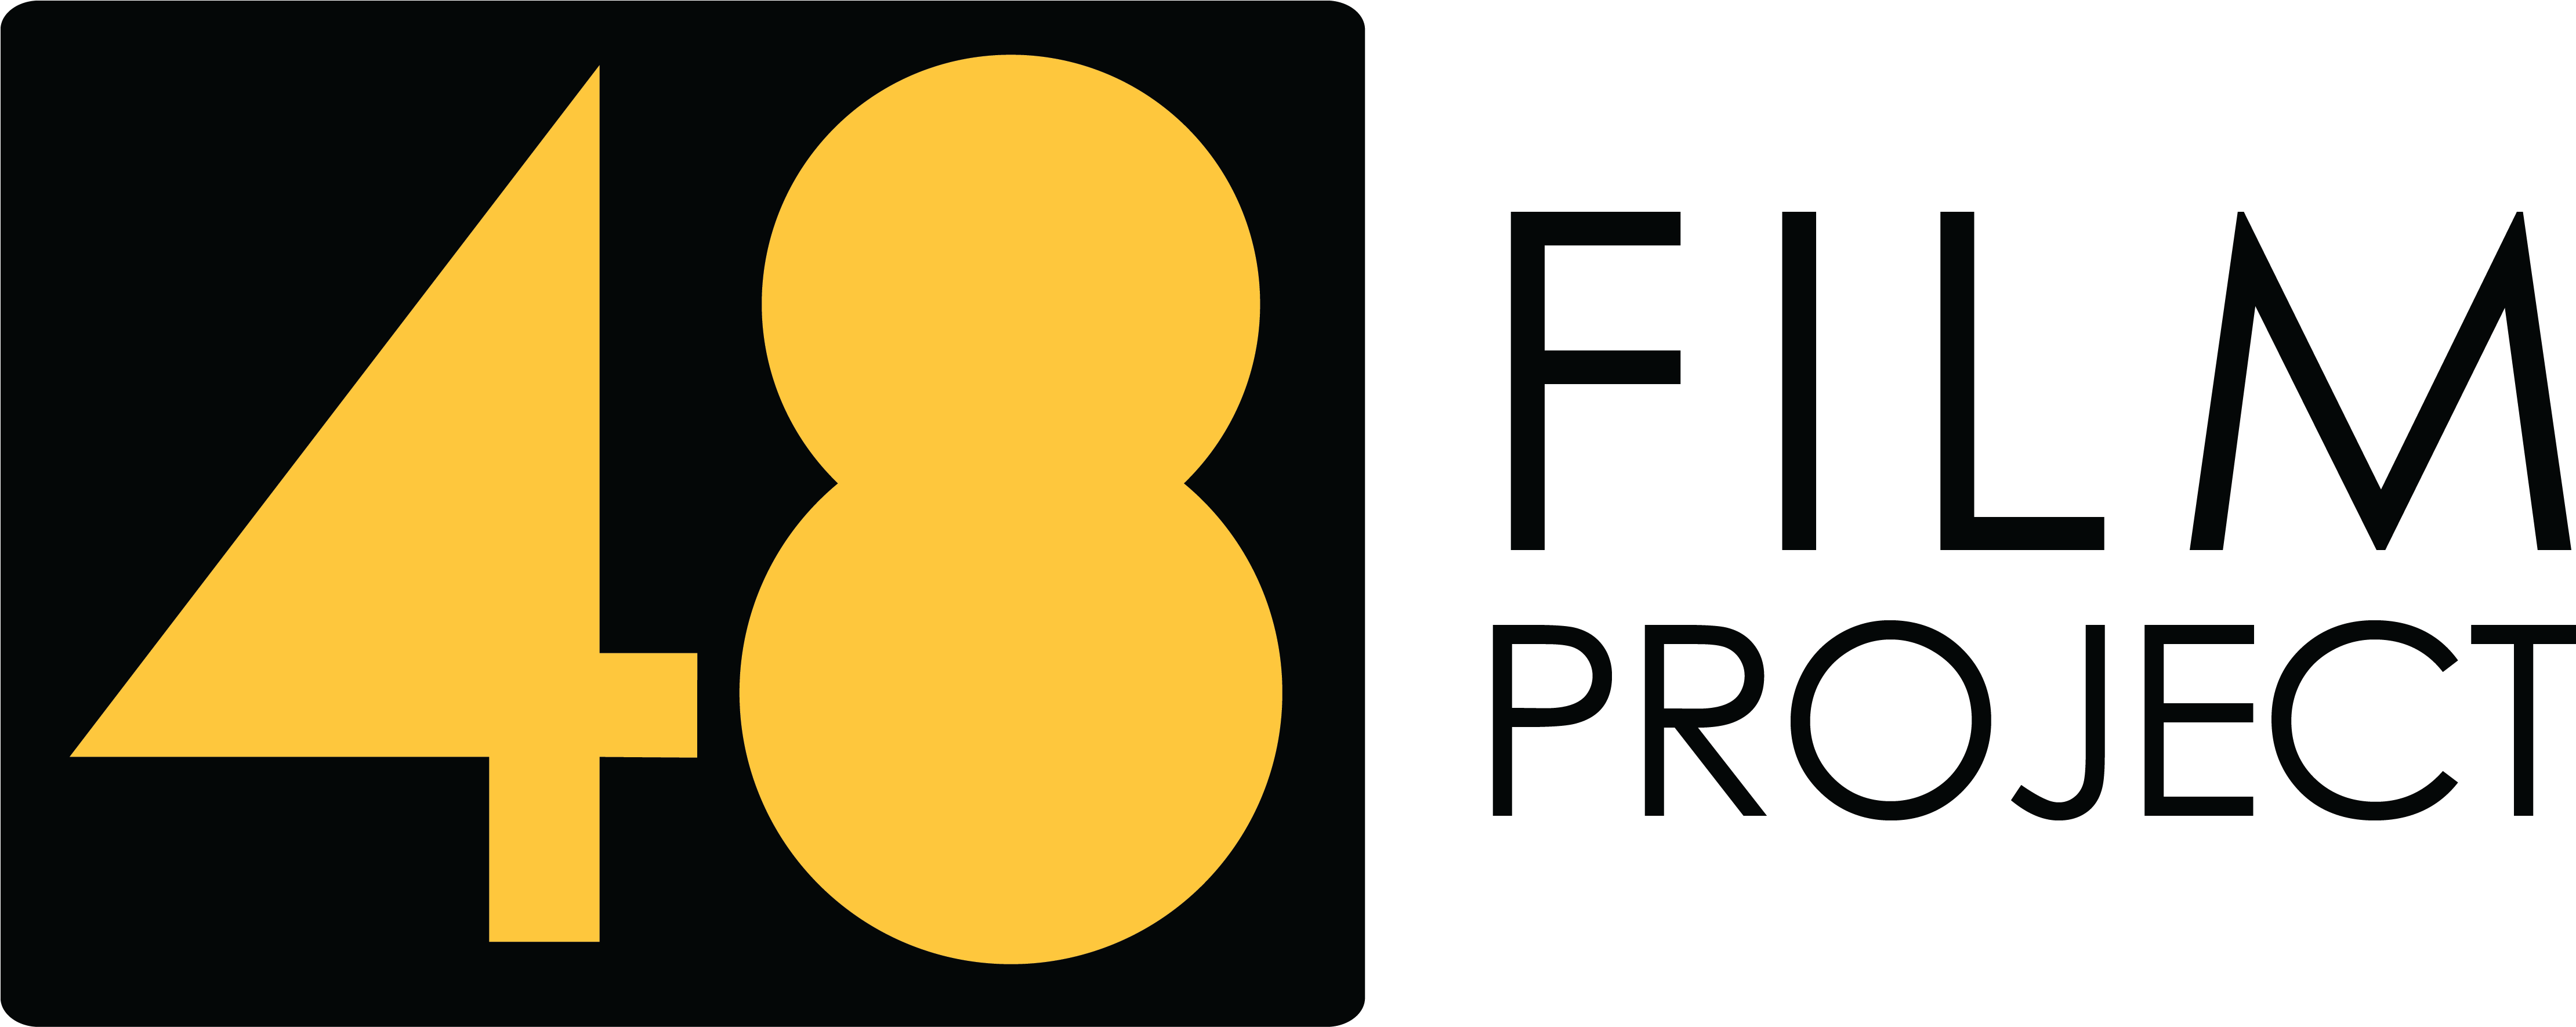 48film Project Logo - 48 Film Project Logo (4558x1769)